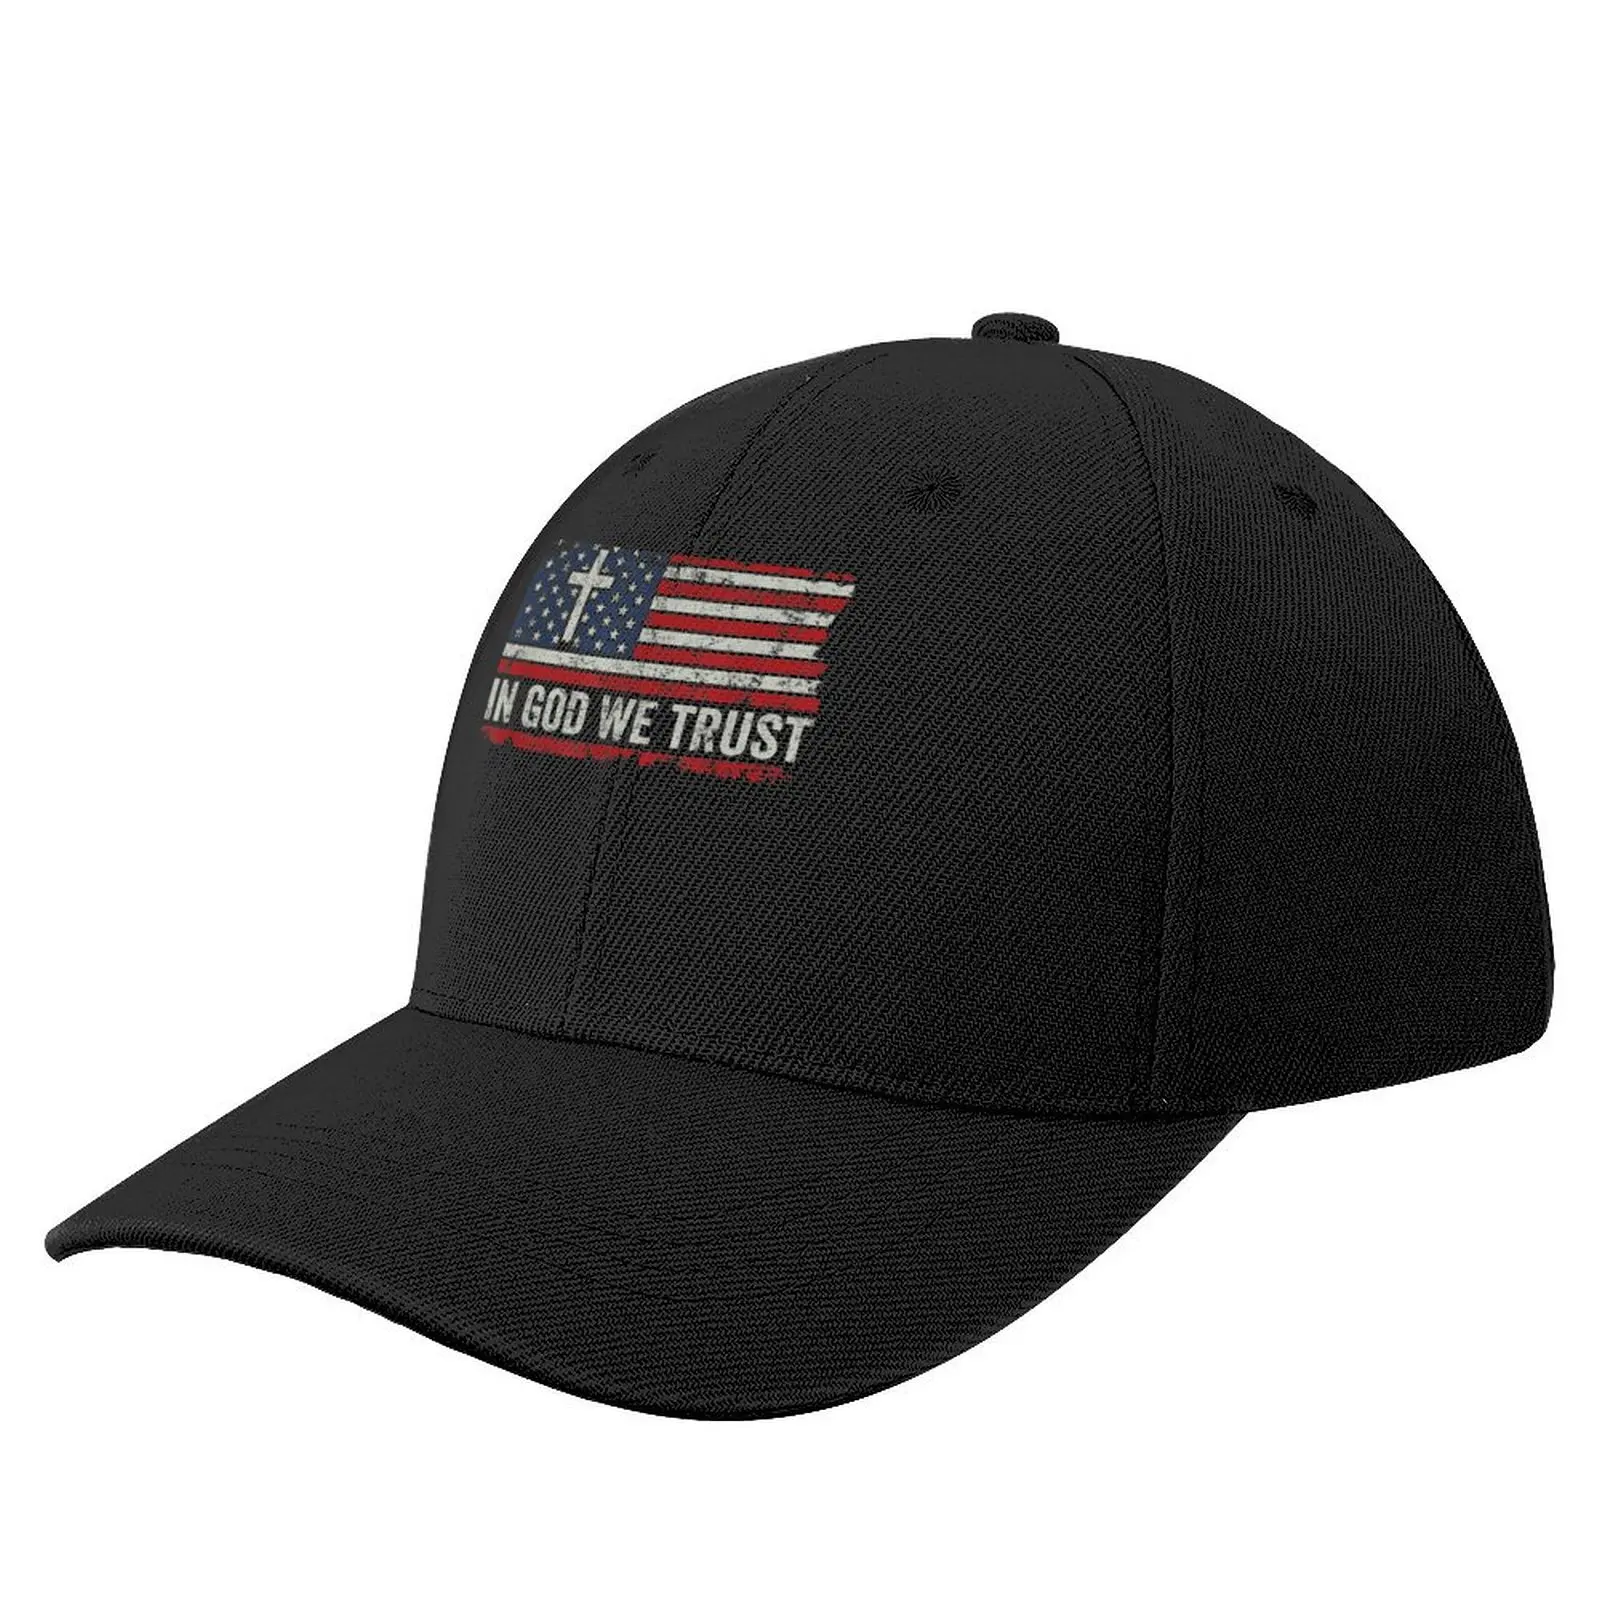 

In God We Trust - Vintage USA Flag Cross Patriotic Christian T-Shirt Baseball Cap cute Thermal Visor Men's Caps Women's